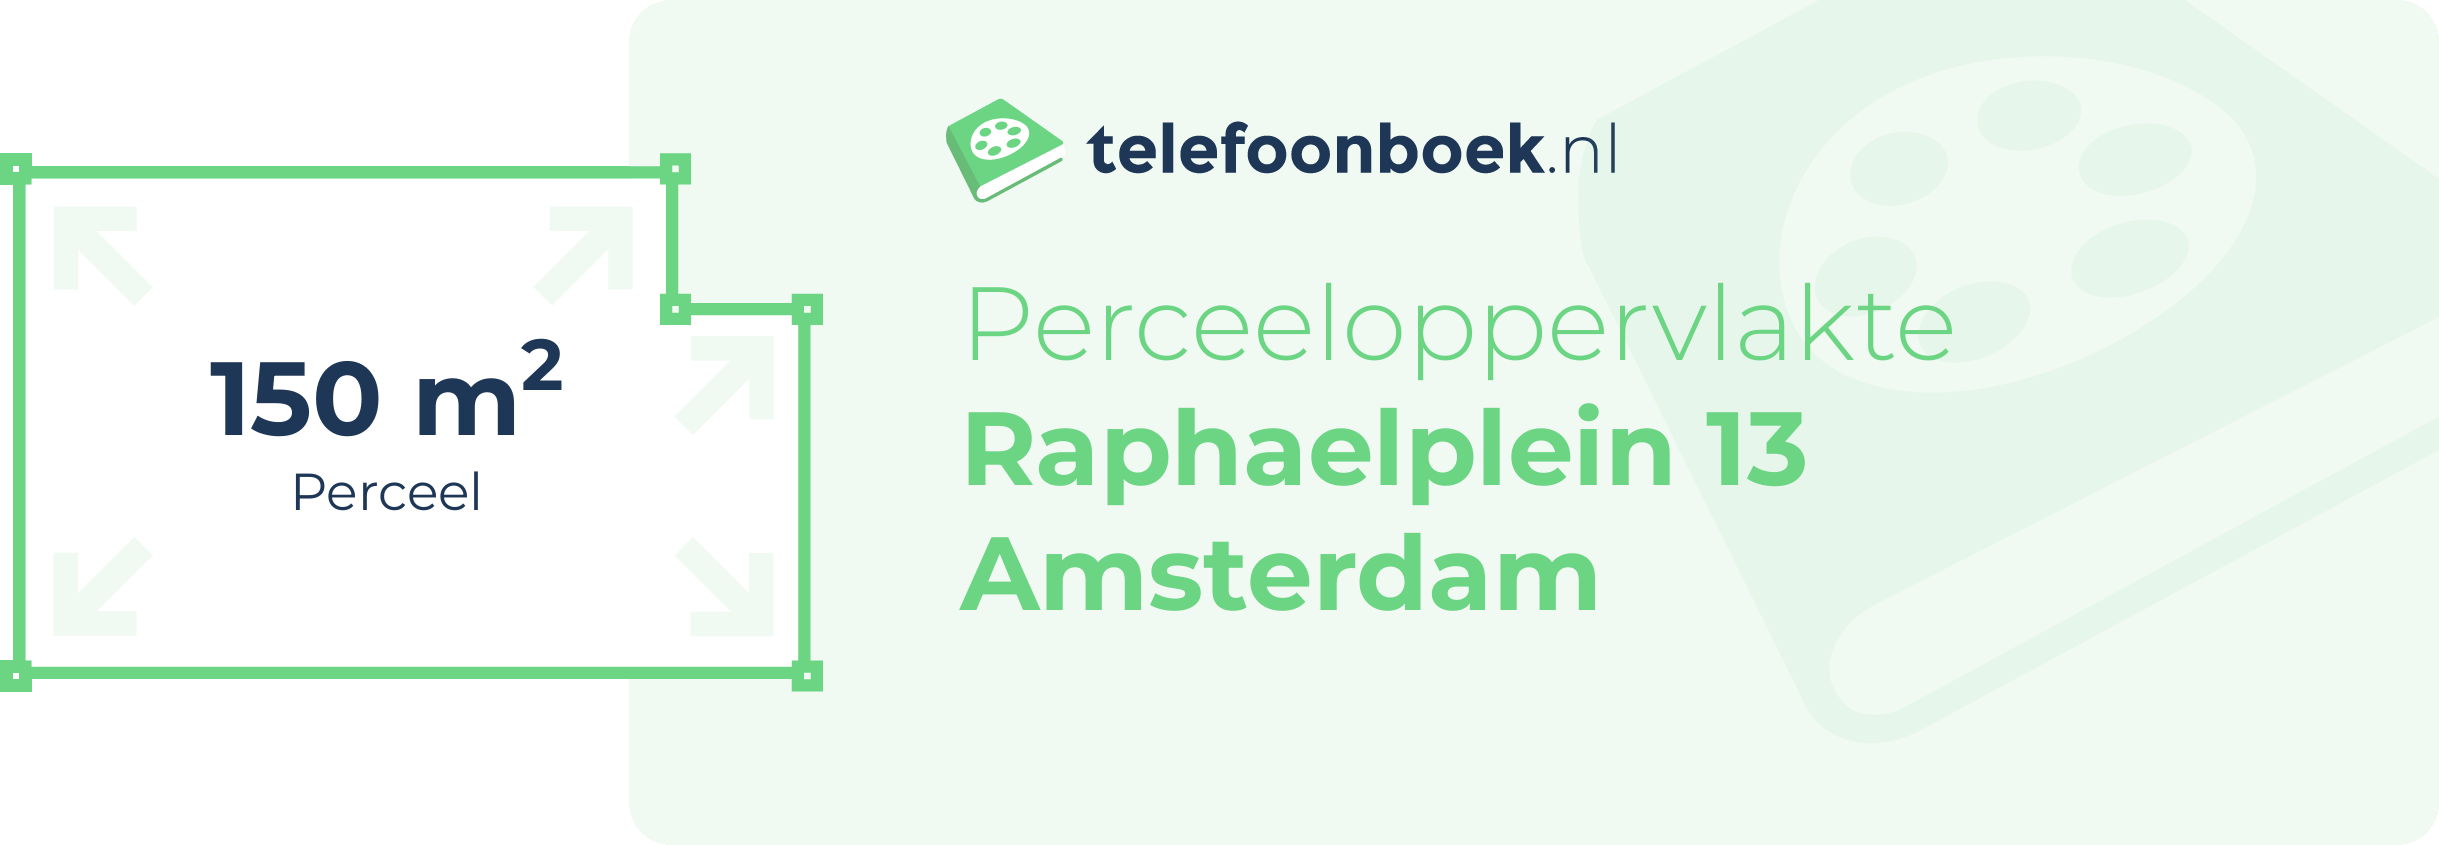 Perceeloppervlakte Raphaelplein 13 Amsterdam